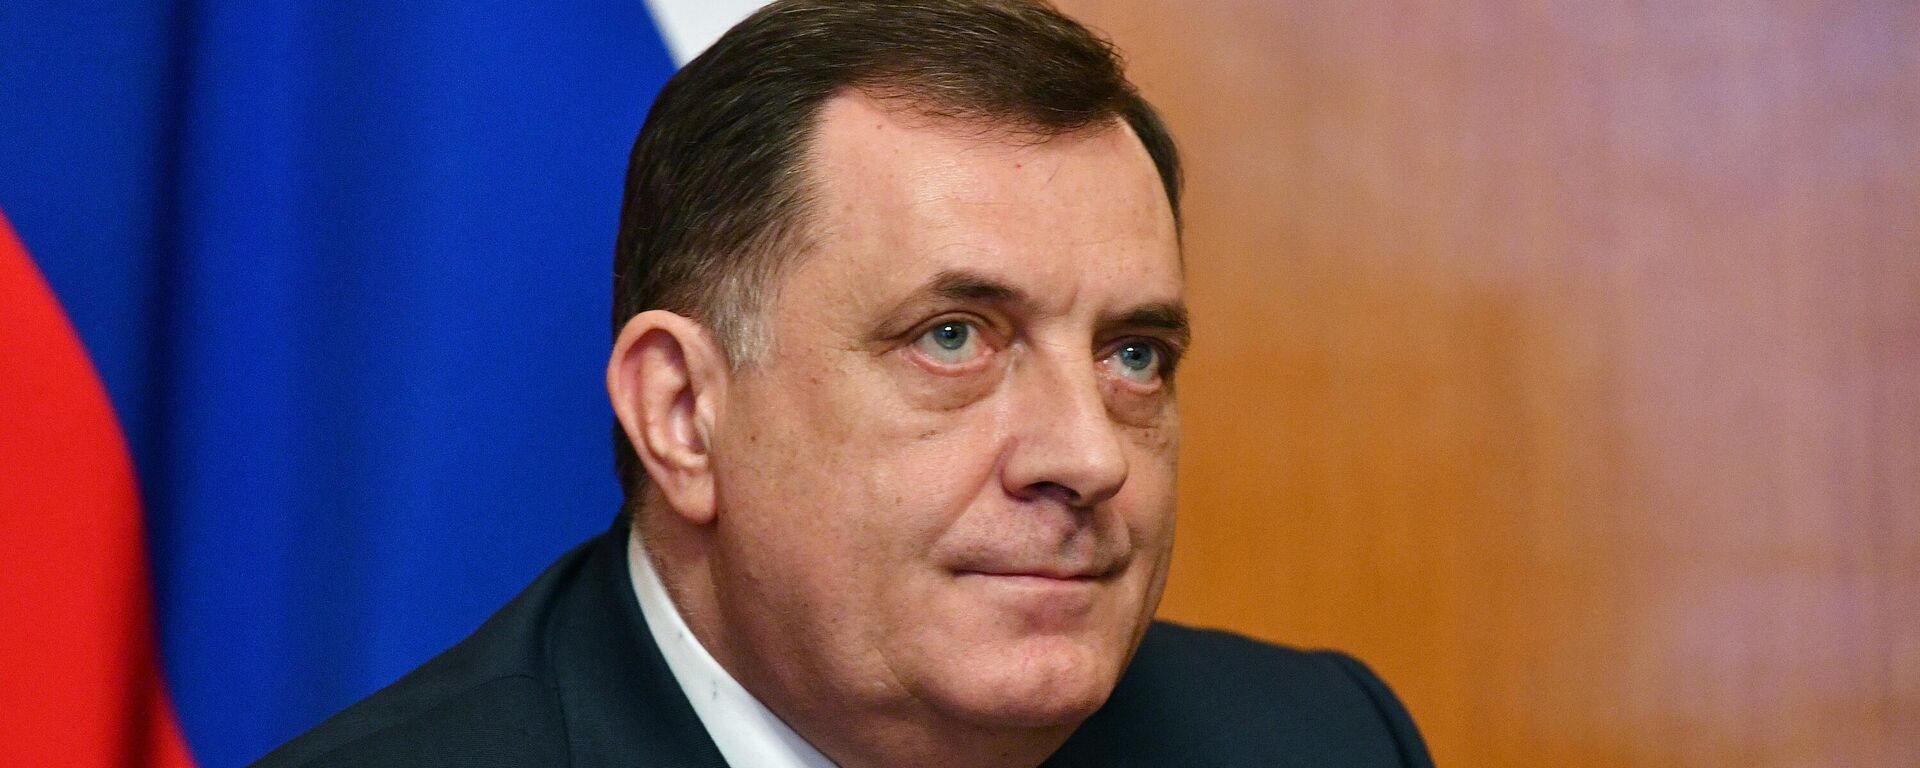 Milorad Dodik, líder serbobosnio - Sputnik Mundo, 1920, 01.10.2022